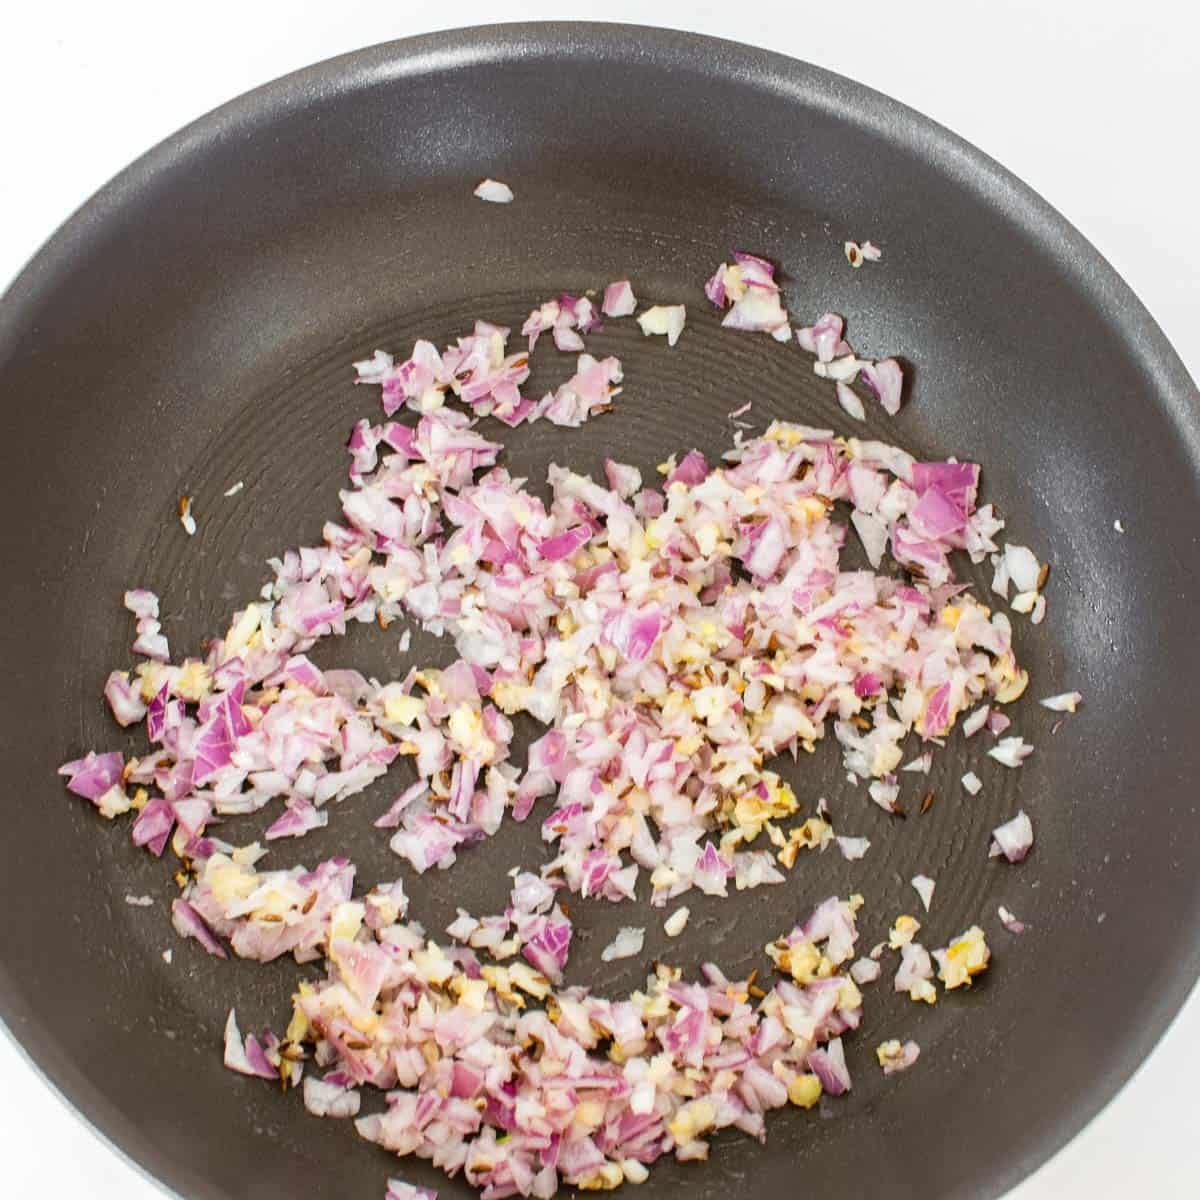 sauteed onion in the pan.